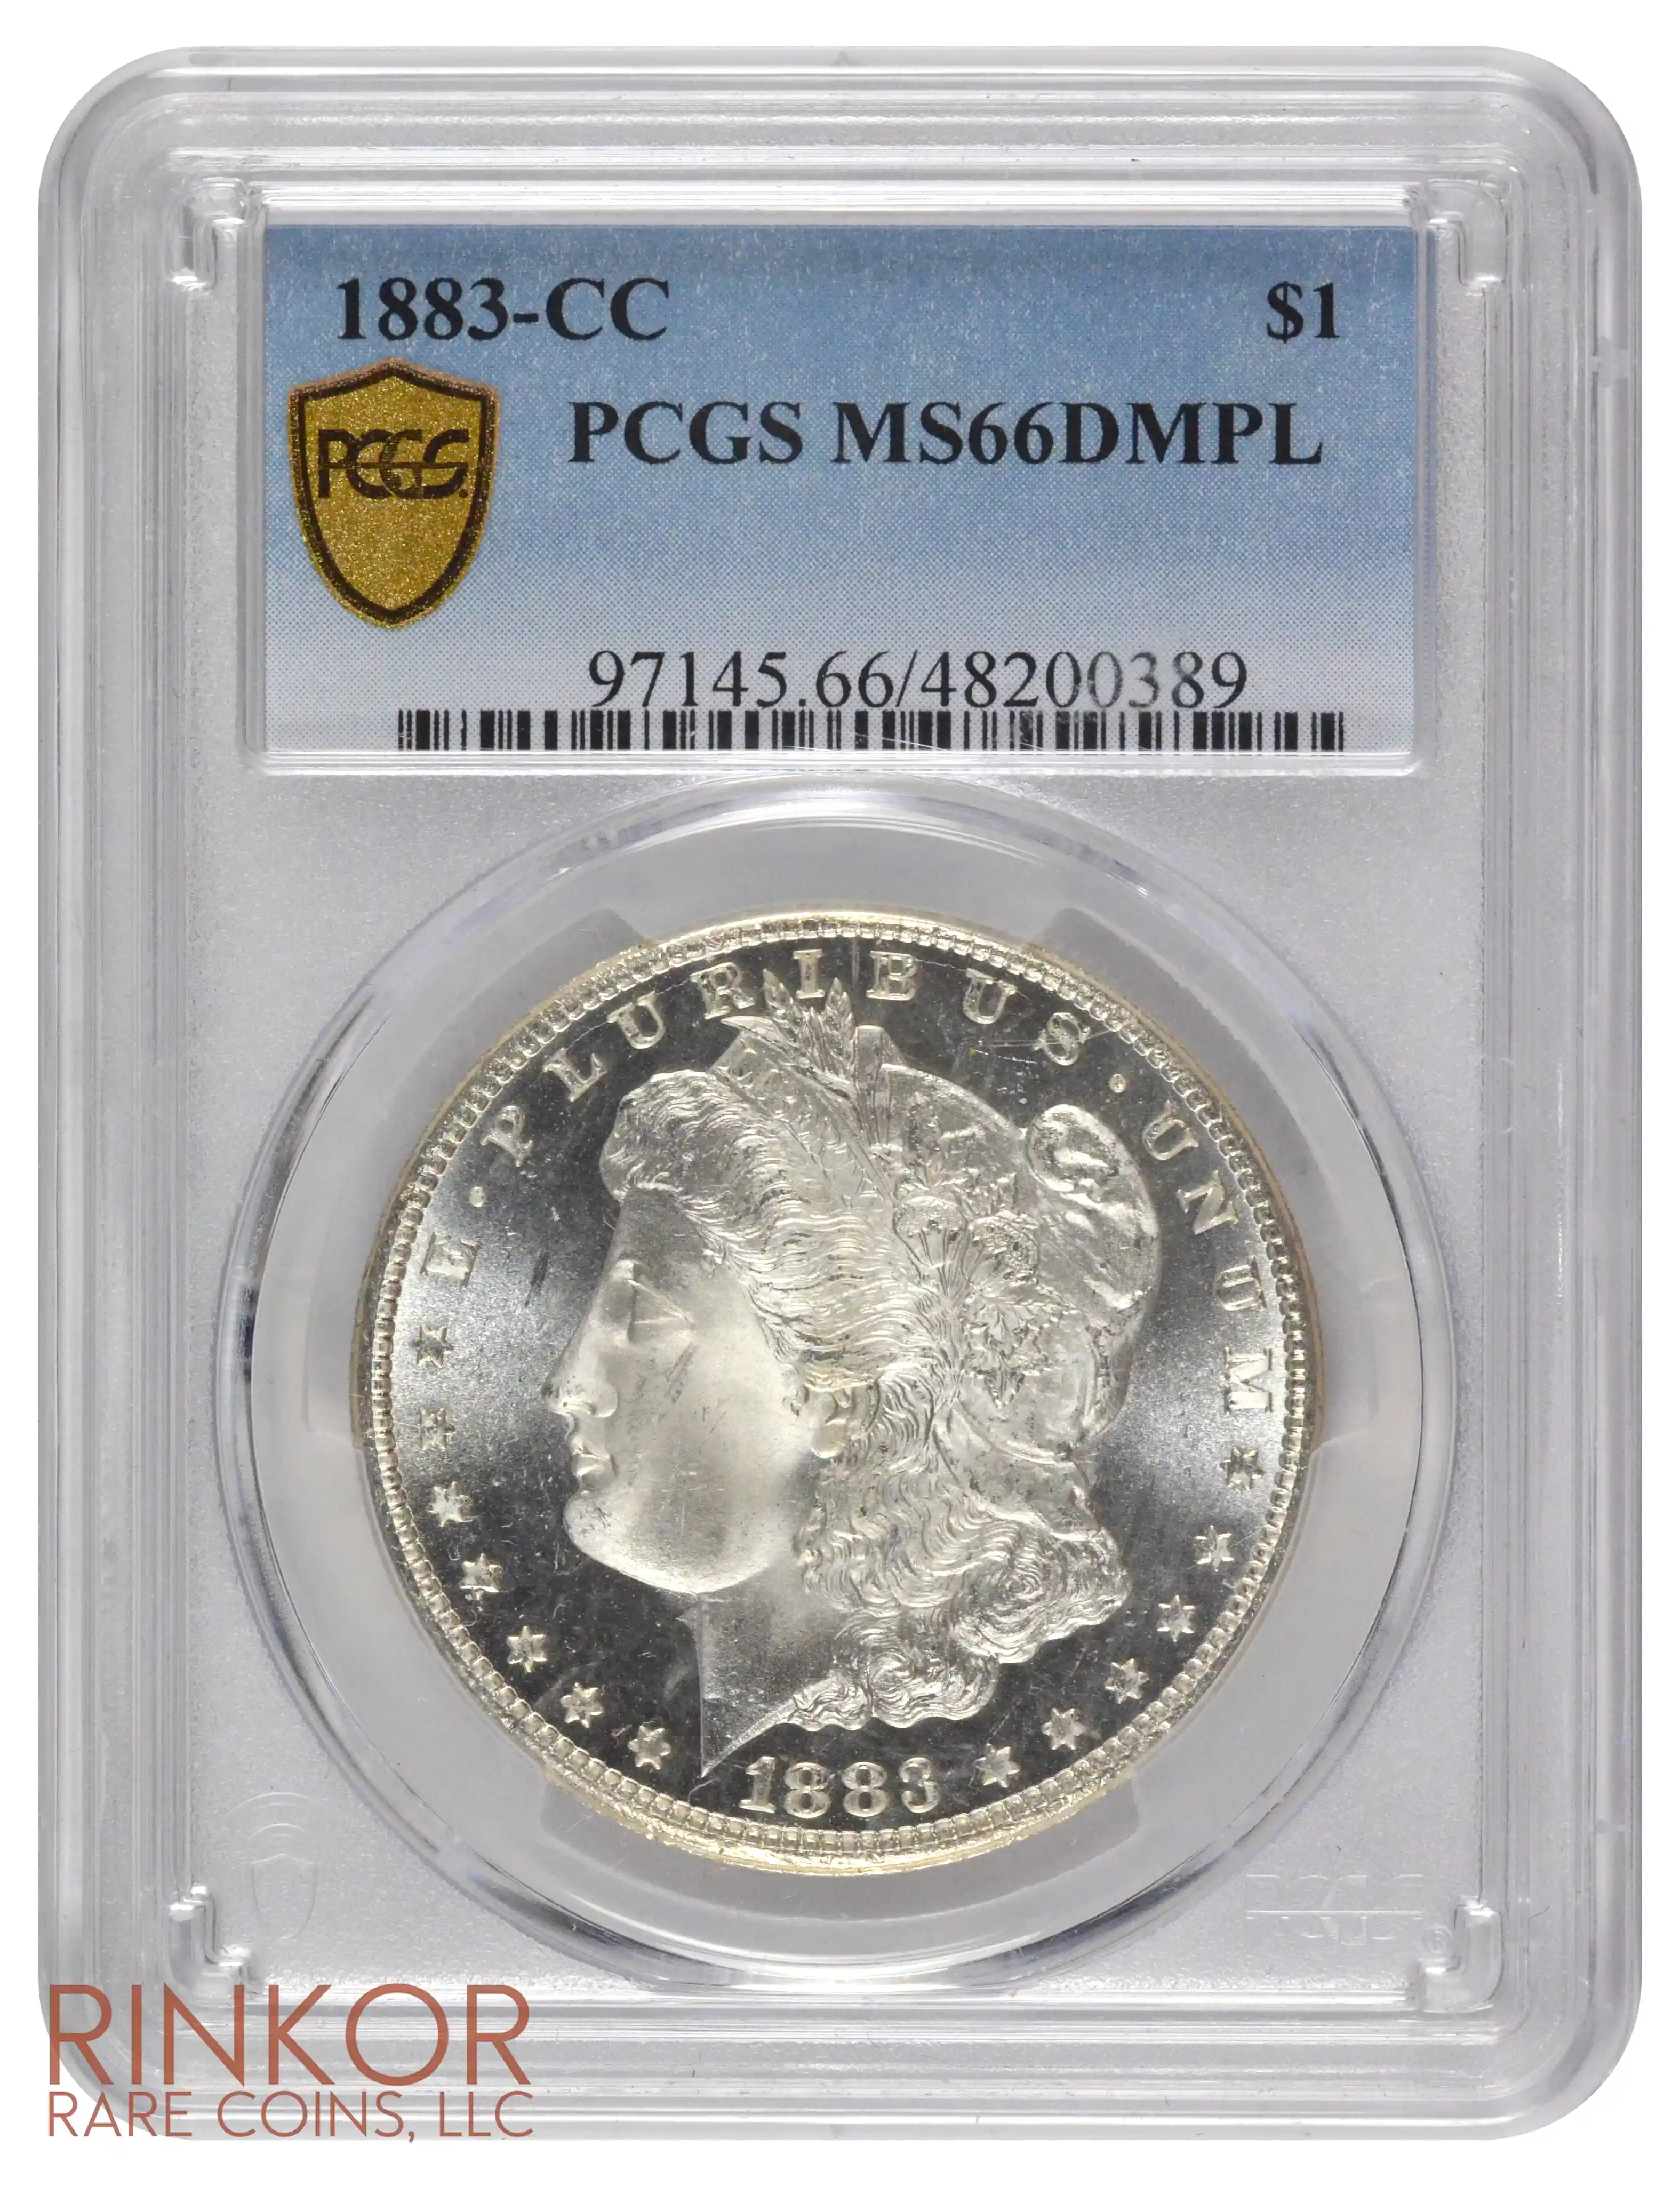 1883-CC $1 PCGS MS 66 DMPL 